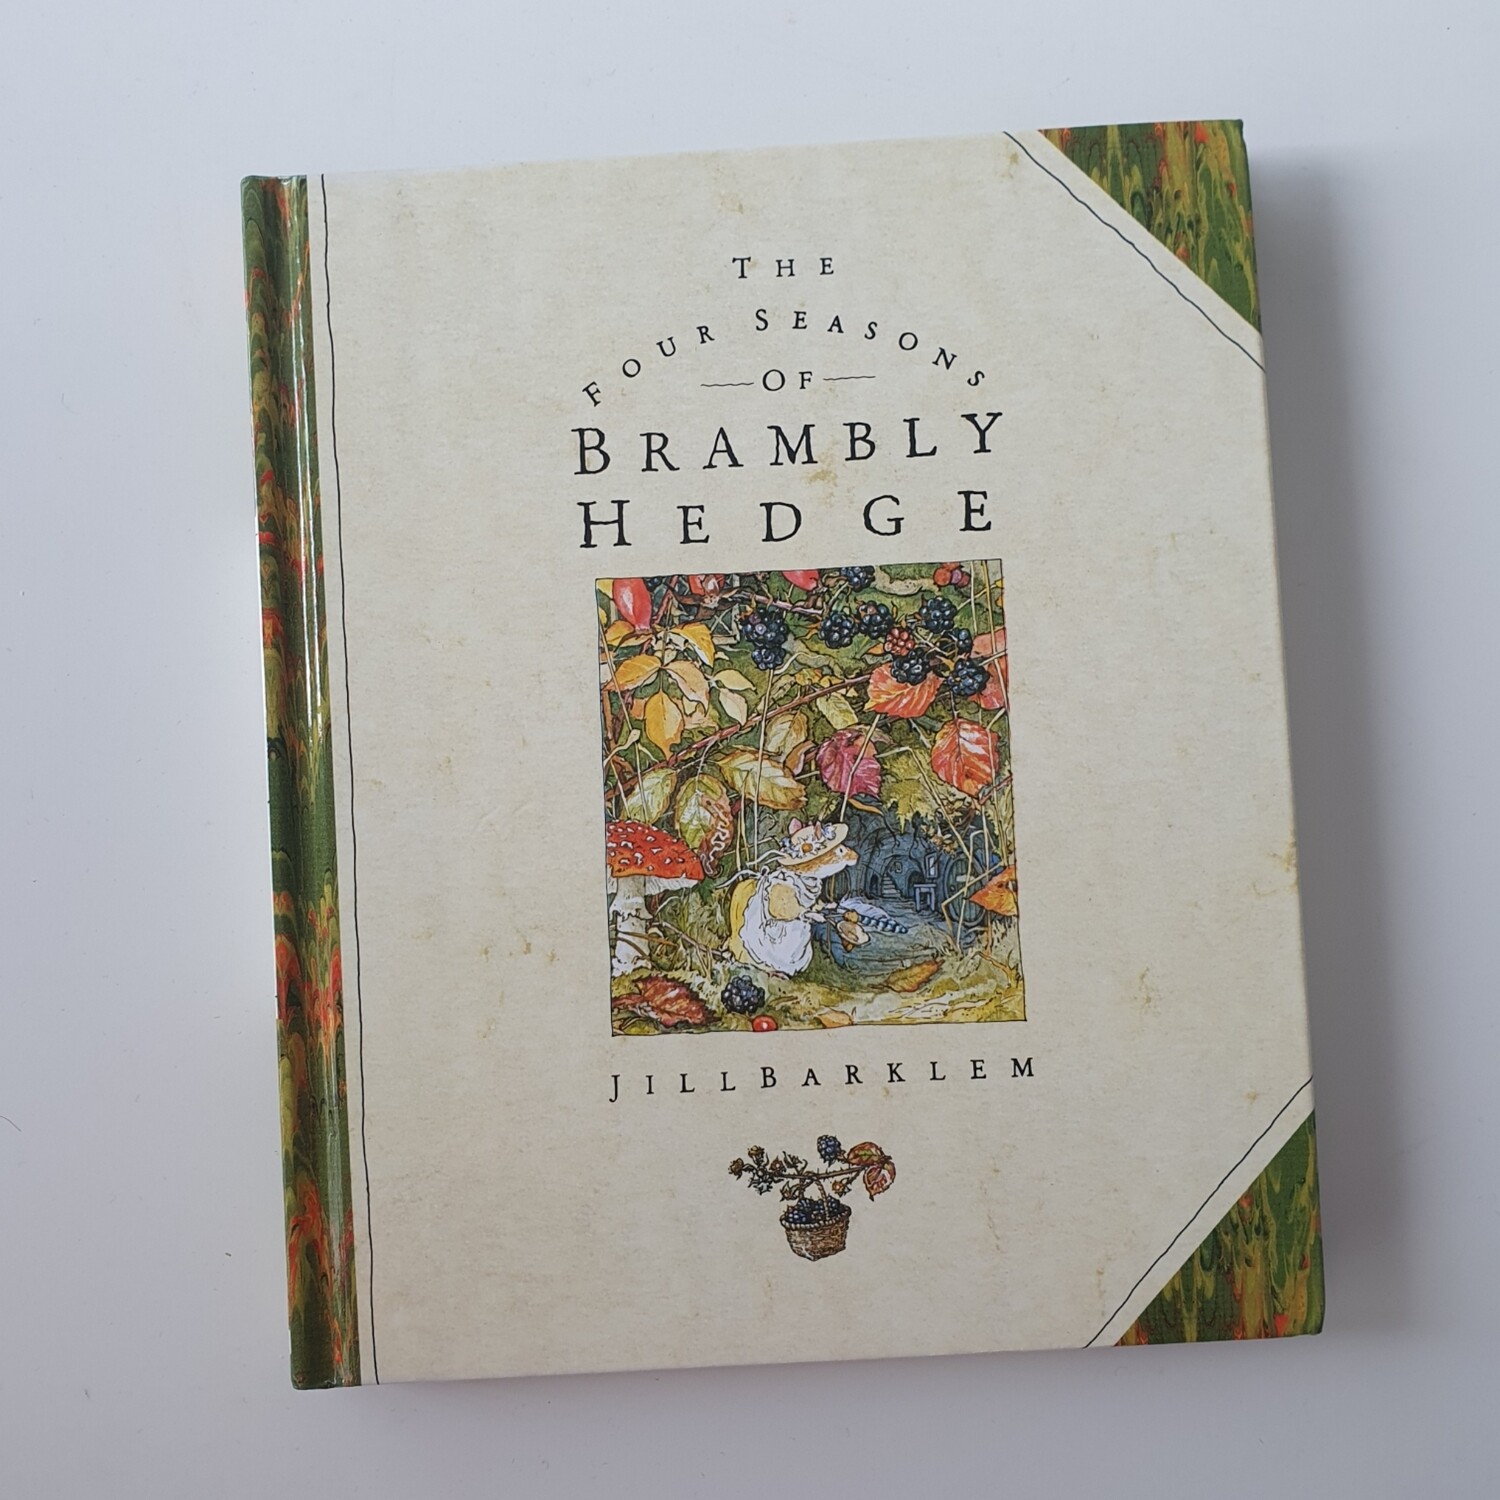 Brambly Hedge - The Four Seasons